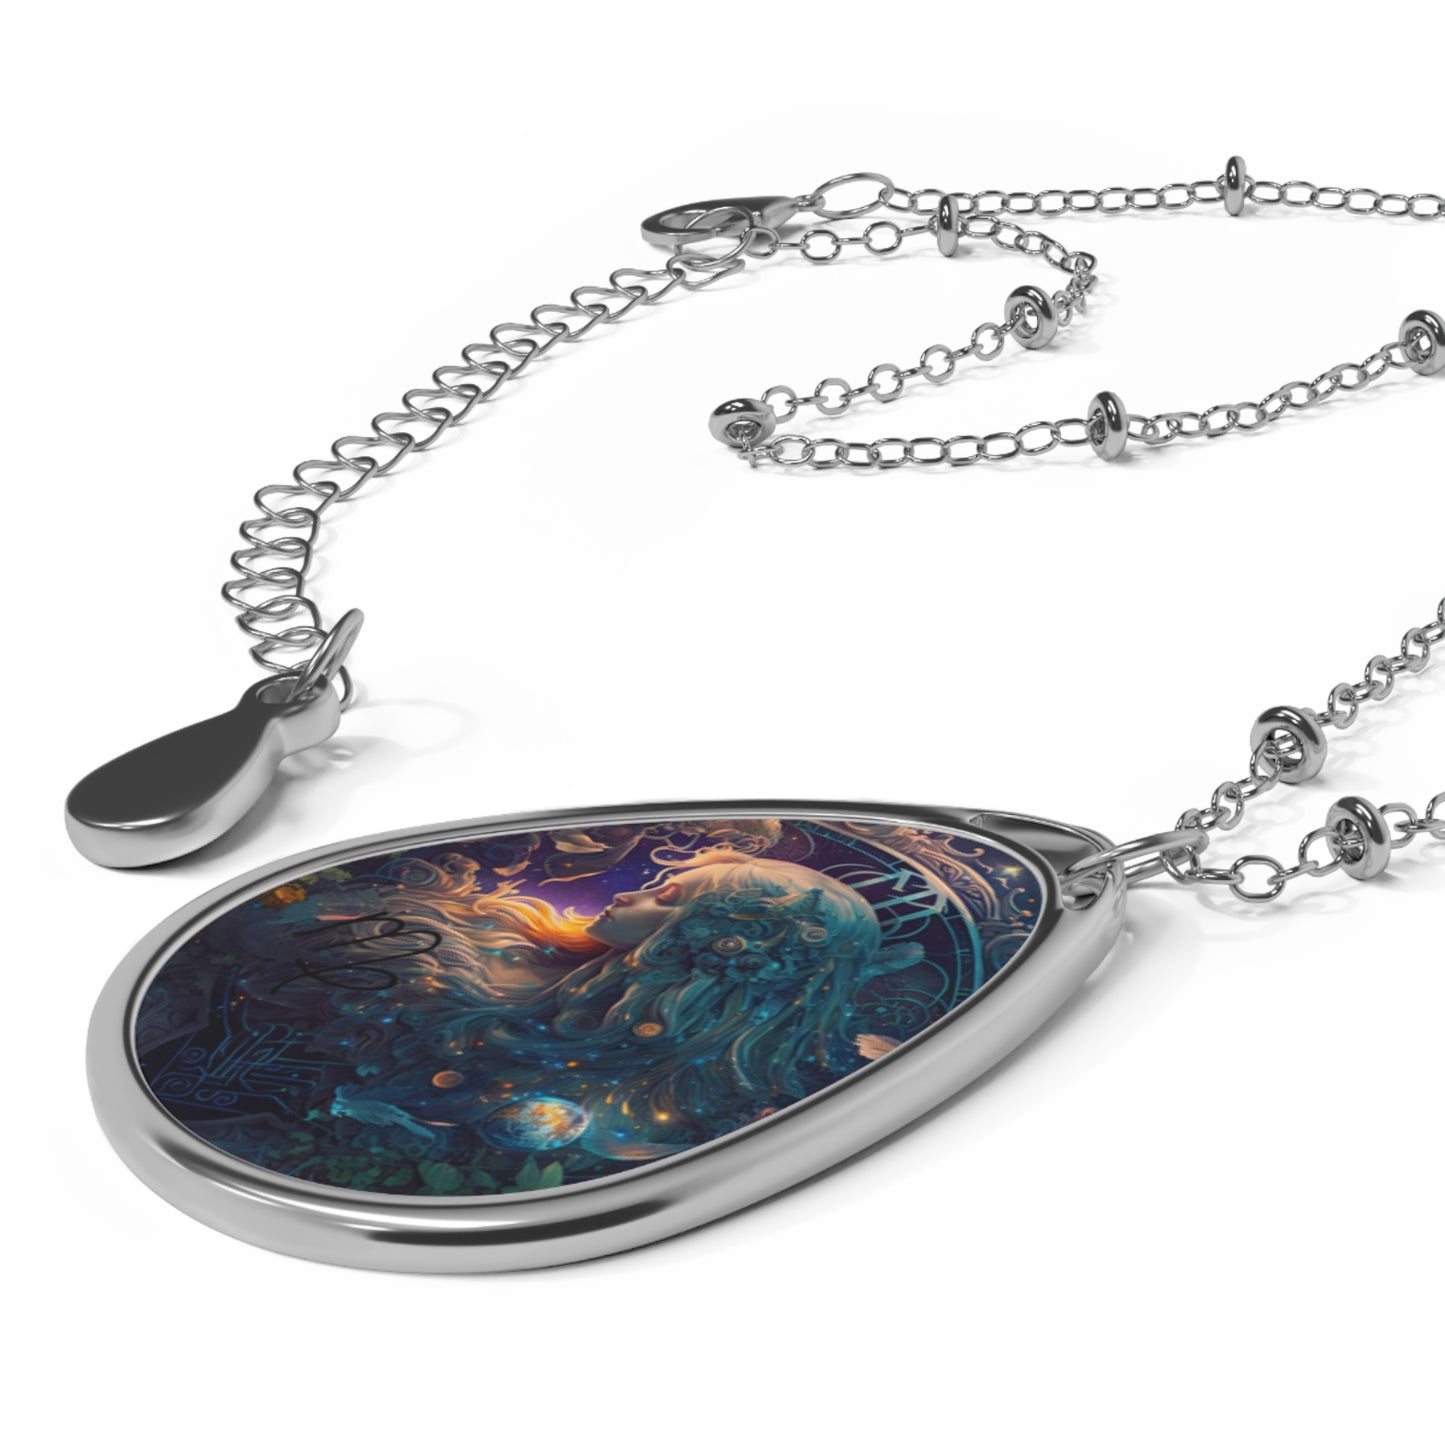 Virgo Zodiac Sign ~ Virgo the Celestial Earth Goddess ~ Necklace & Oval Pendant With Chain